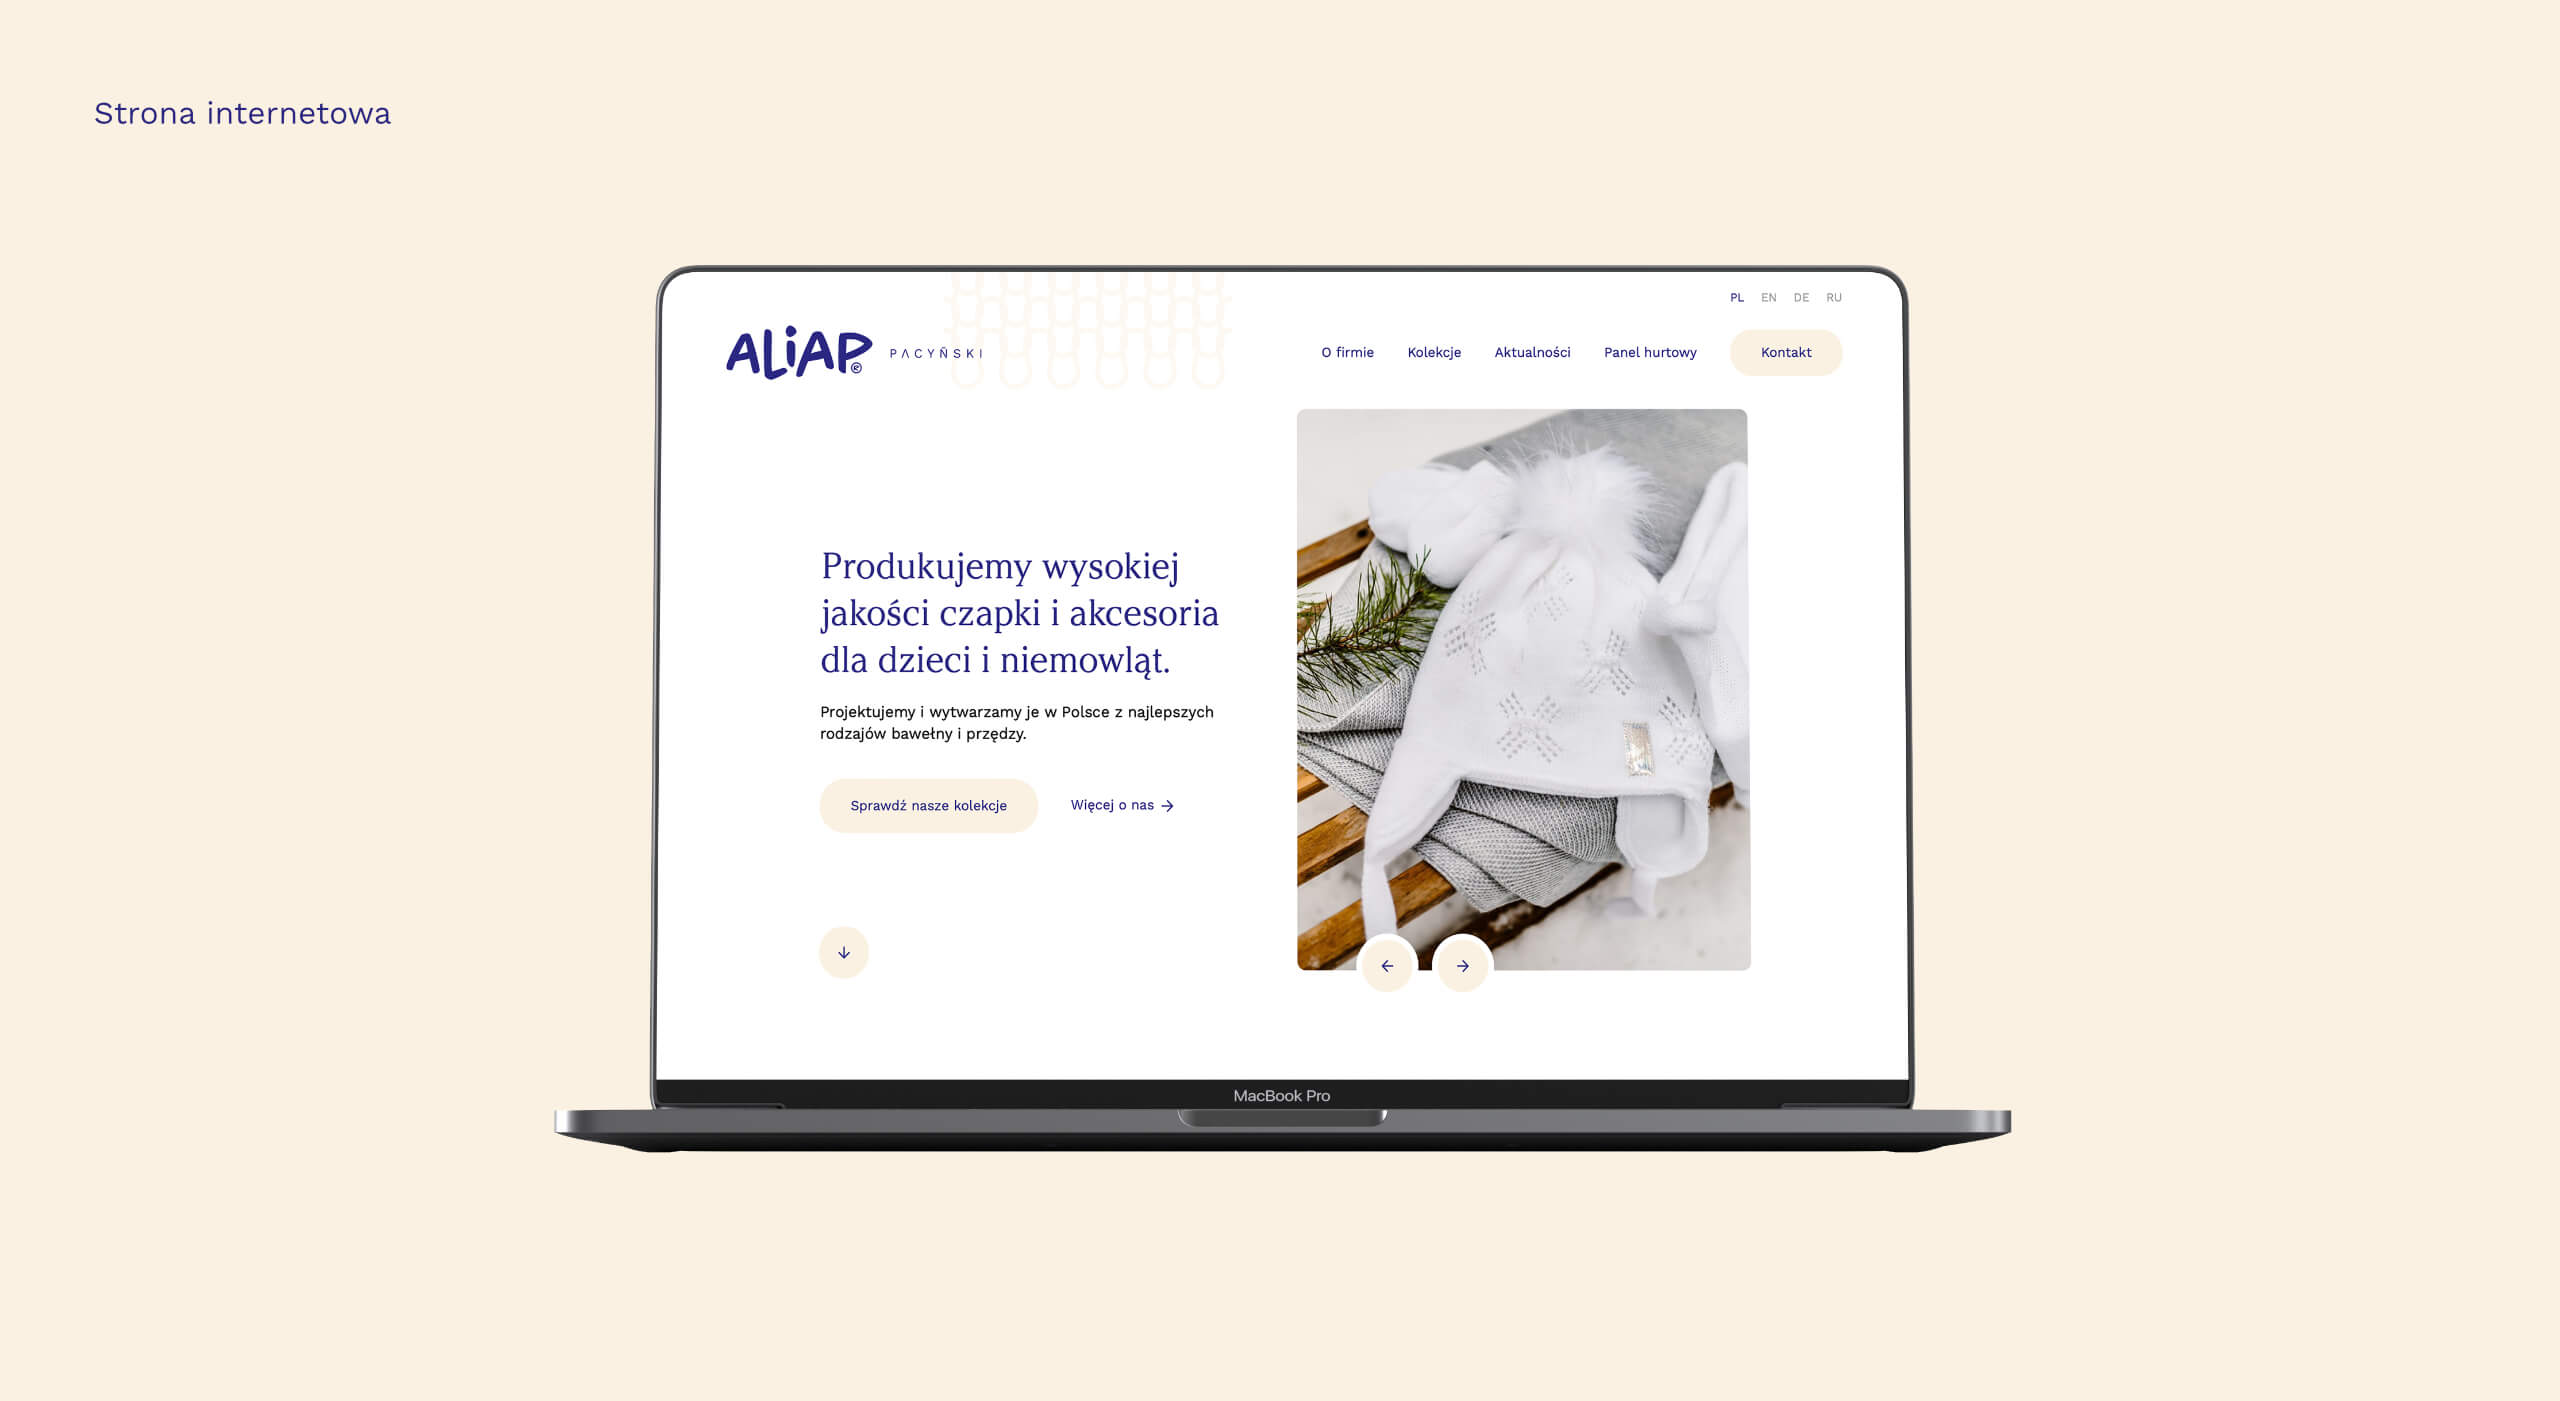 Aliap - Strona internetowa